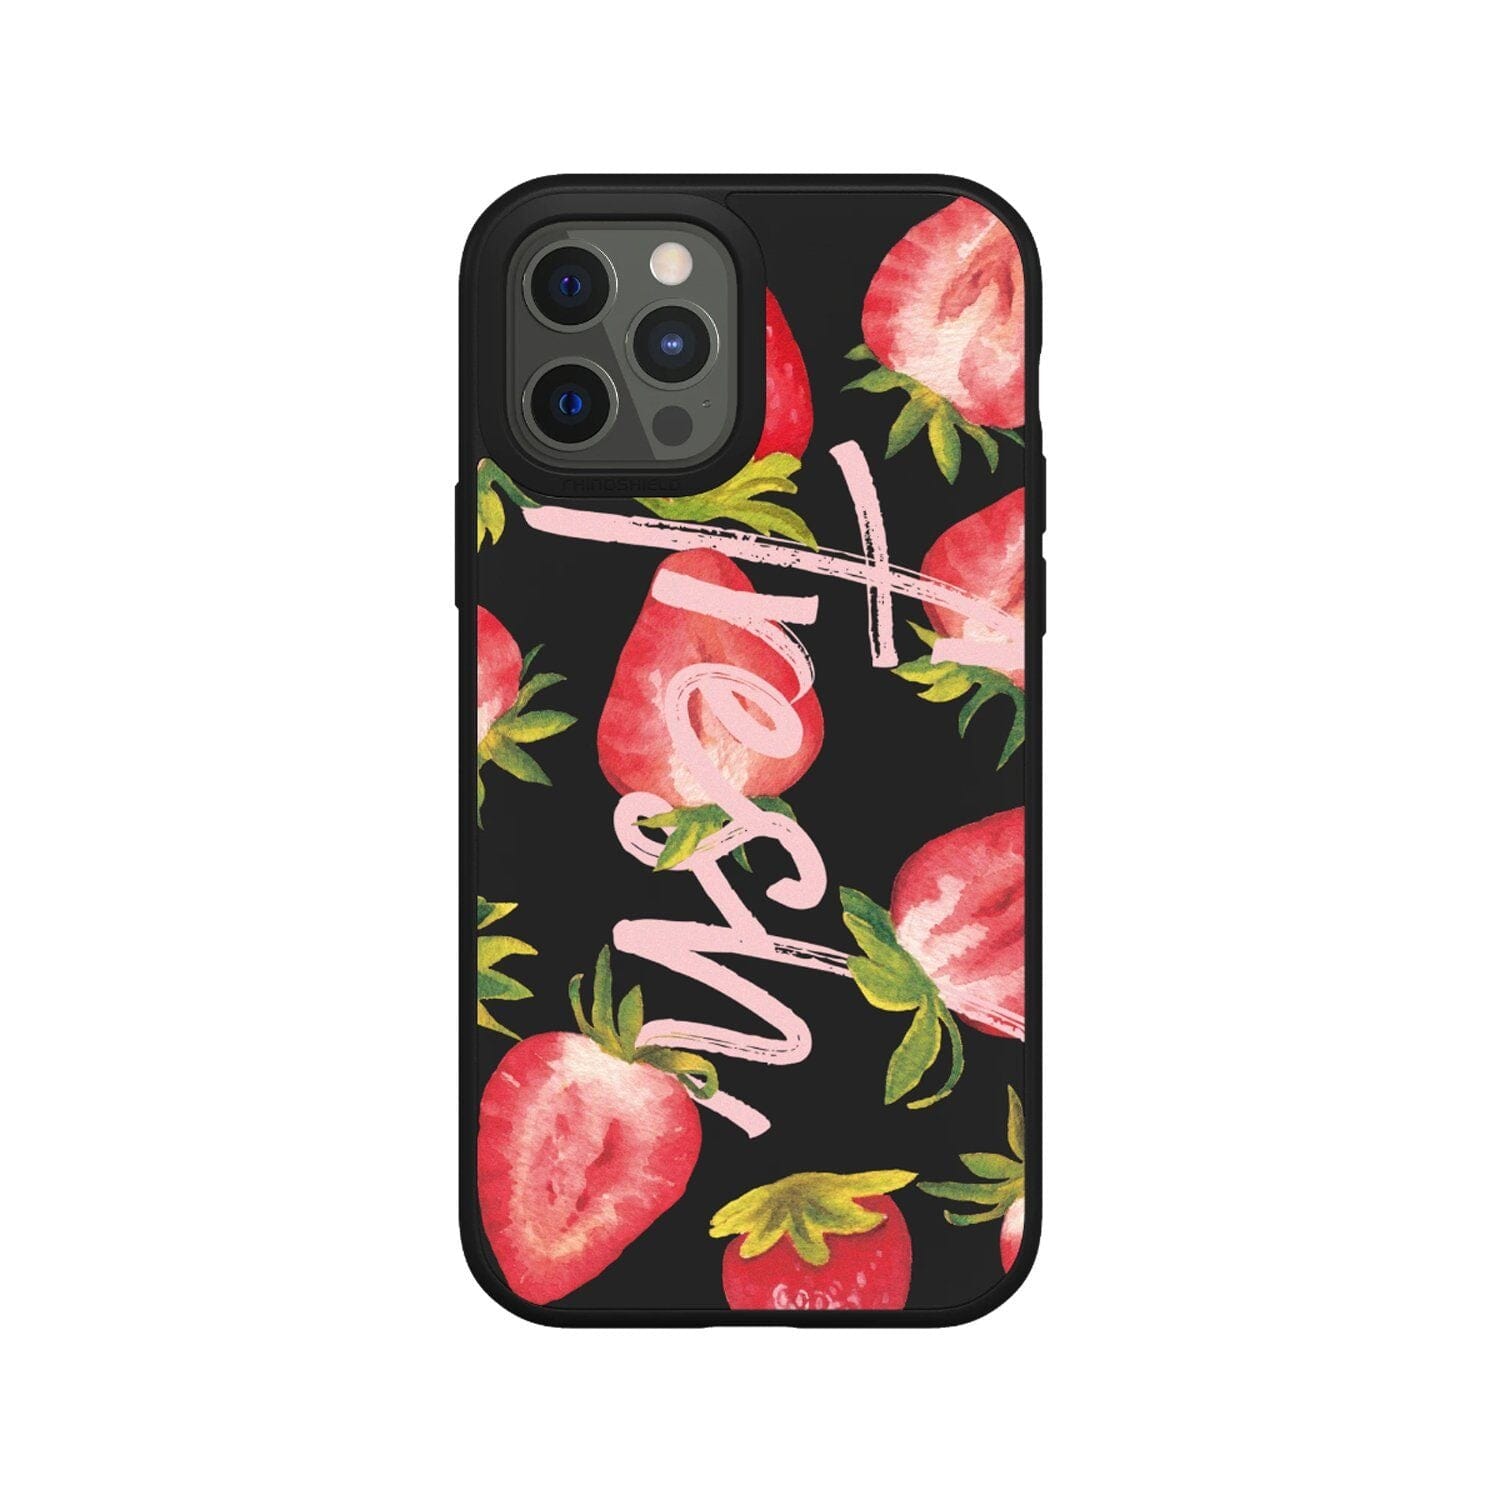 RhinoShield SolidSuit Design Case for iPhone 12 Series (2020) Default RhinoShield iPhone 12 Pro Max 6.7" Black/Sweet Strawberries 